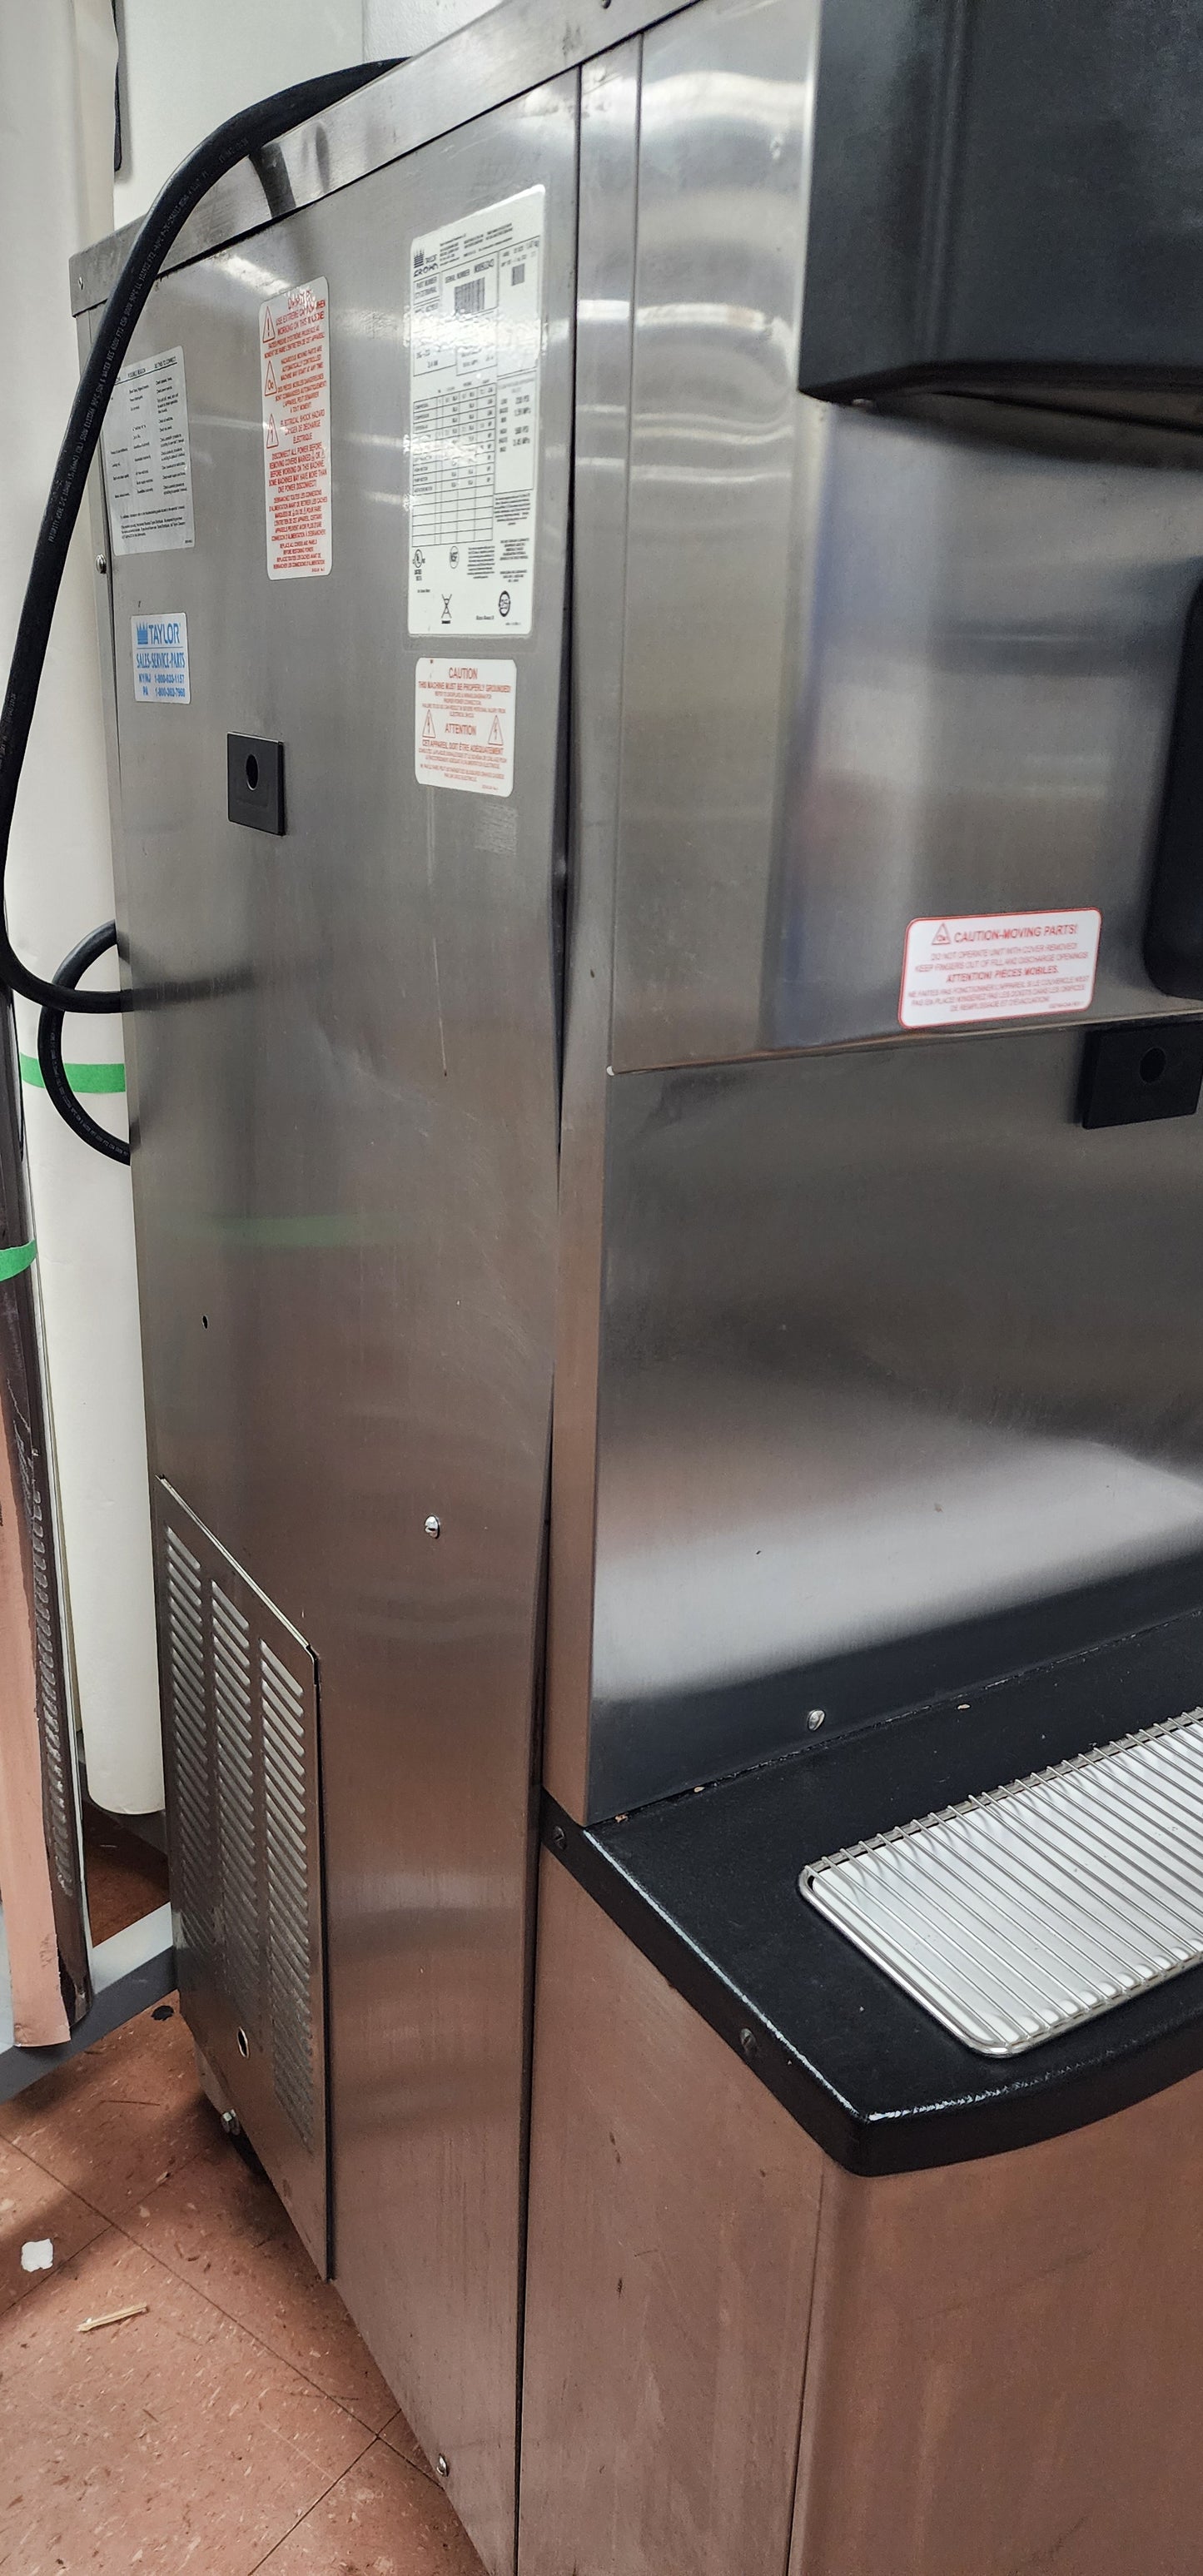 2020 Taylor C717-27 Soft Serve Freezer Twist Air Cooled Ice Cream Machine 1-Phase N0093343 - JS